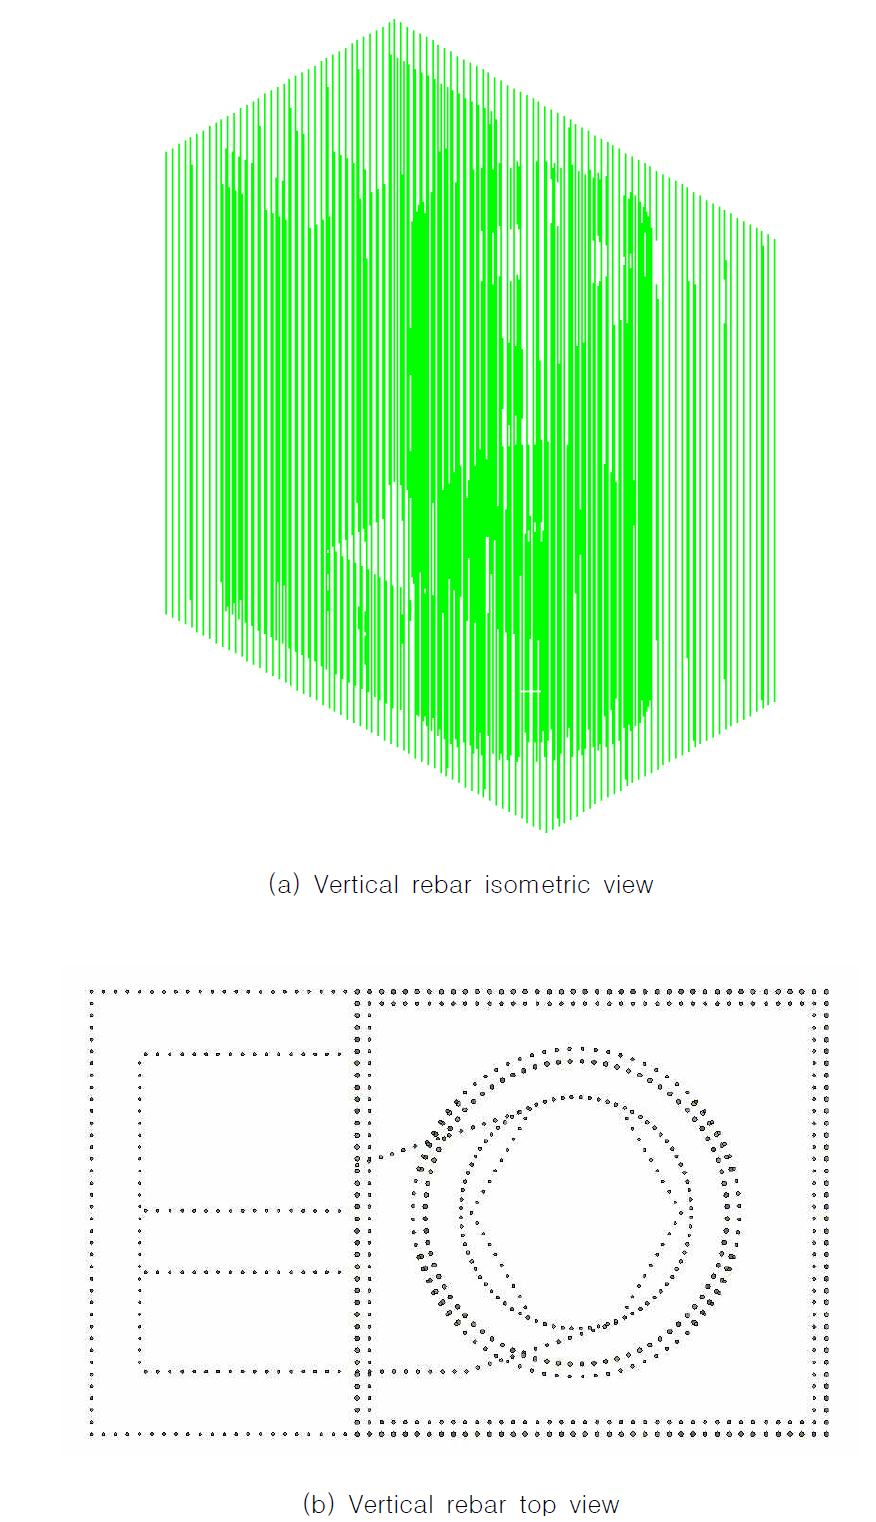 Arrangement of vertical rebar